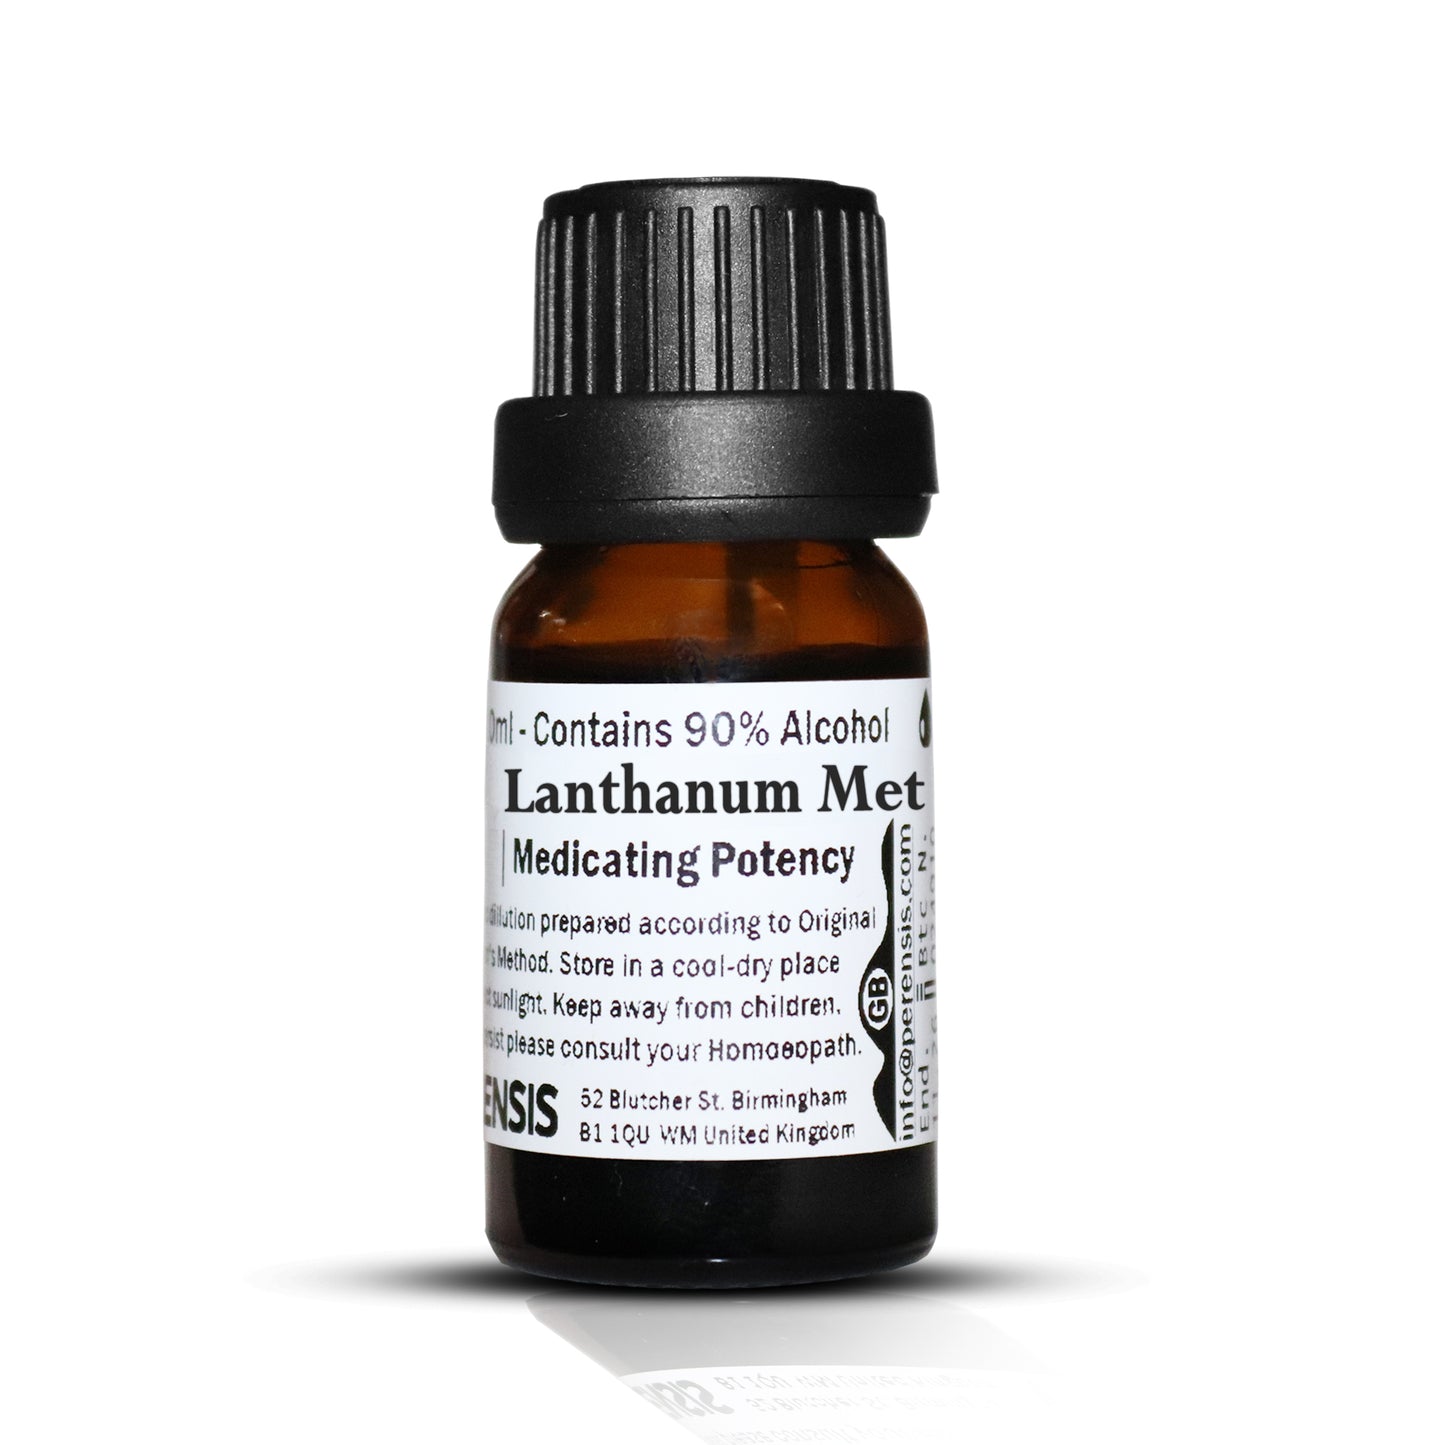 Lanthanum Met